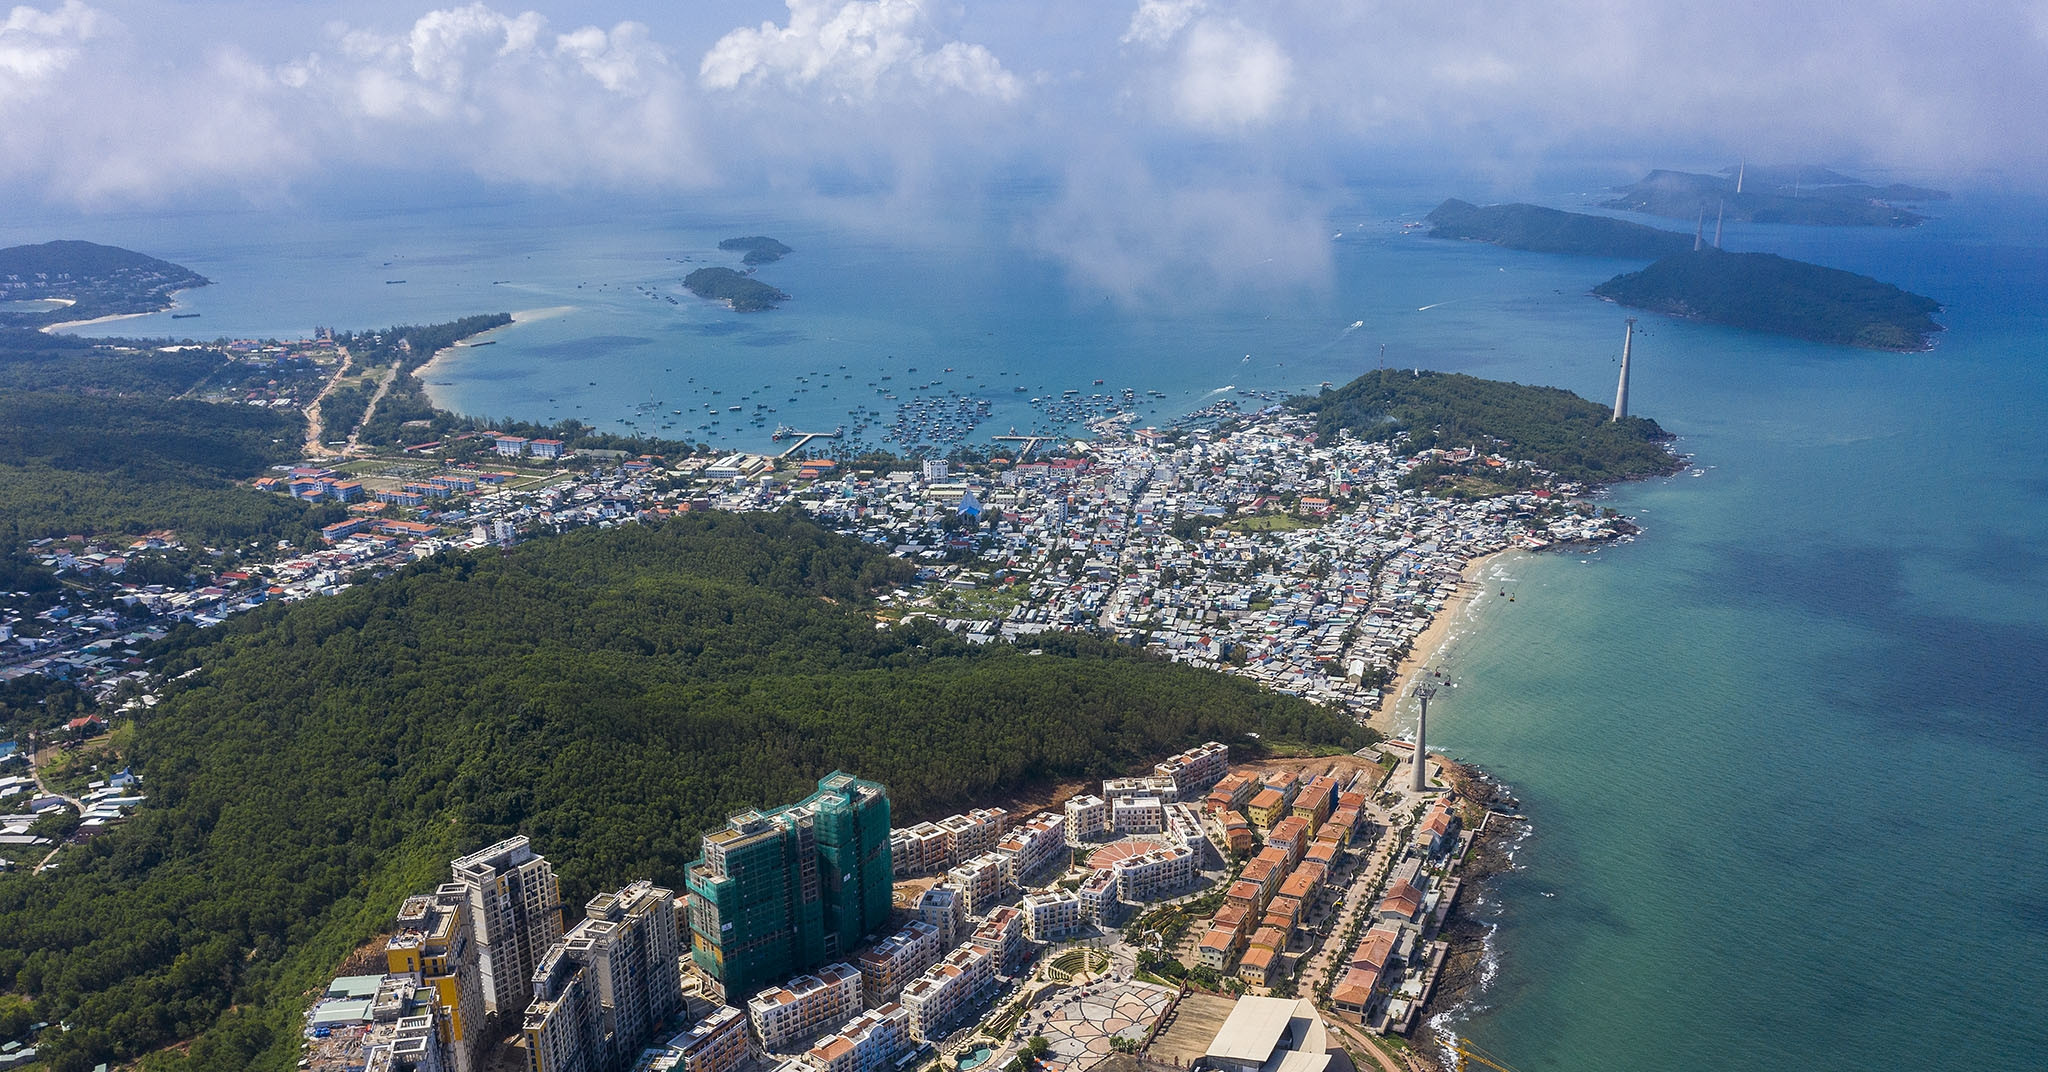 Phu Quoc: Vietnam’s first island city